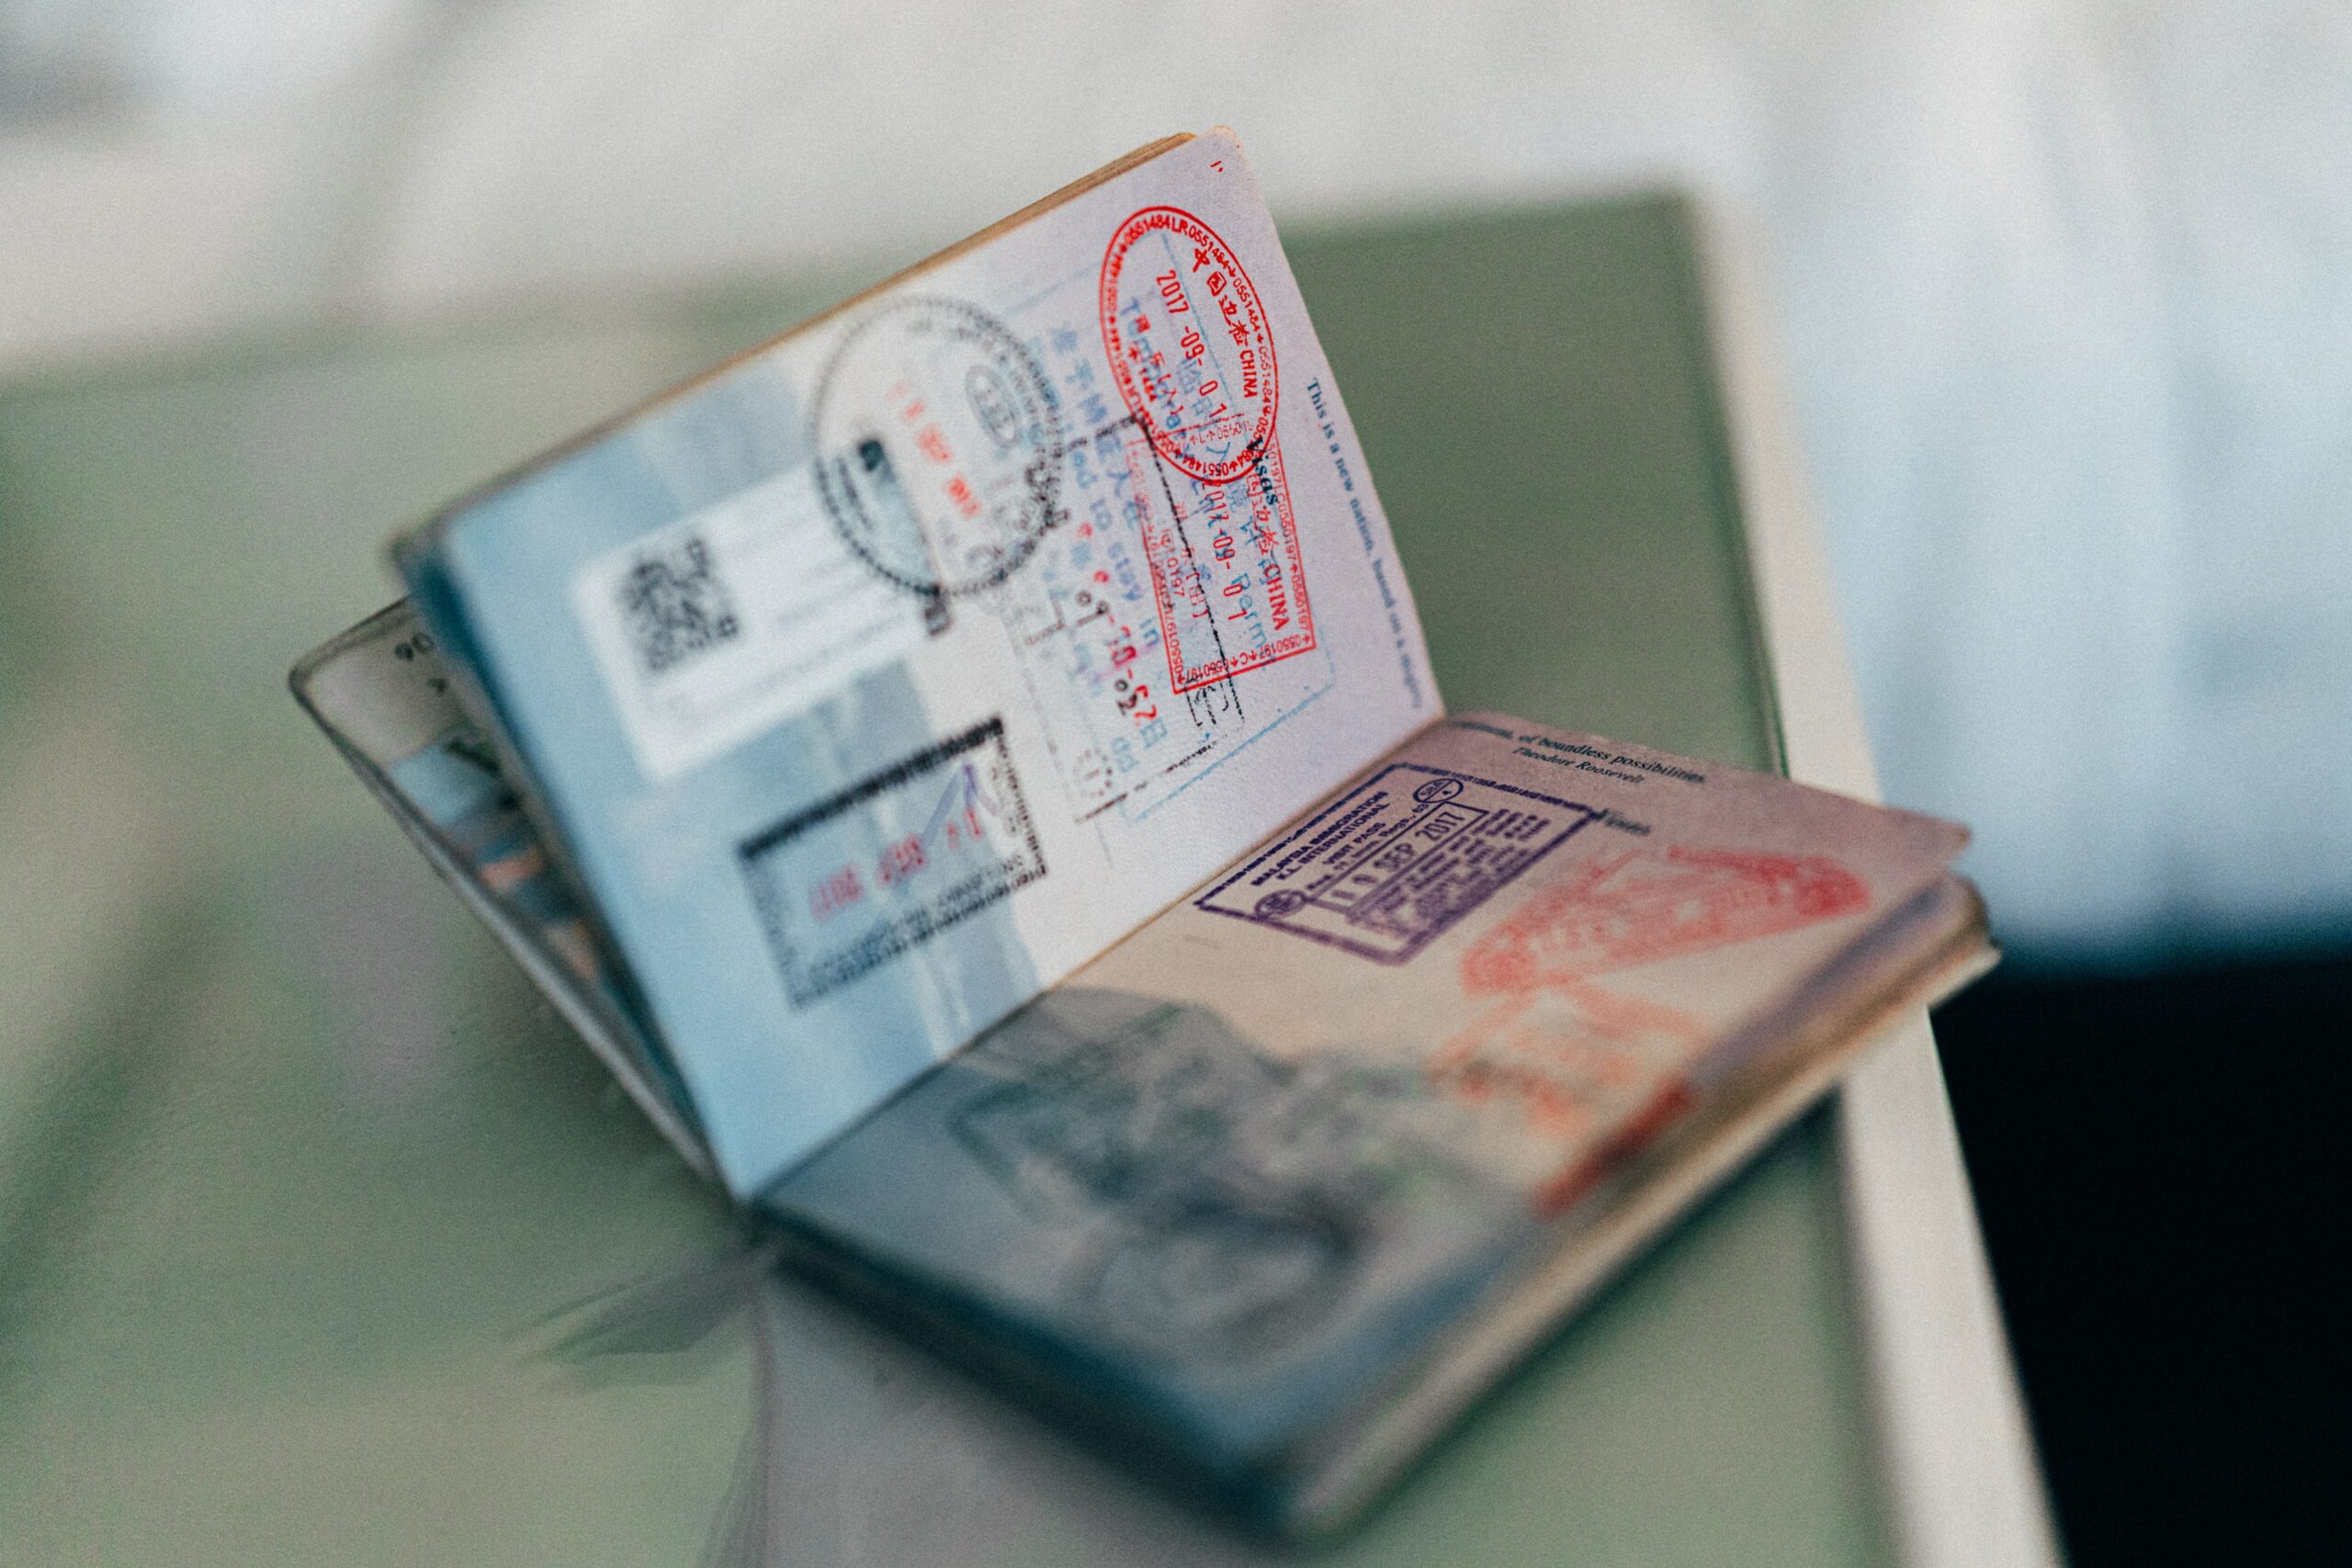 passaporte aberto em cima da mesa - foto tirada por Henry Thong no Unsplash